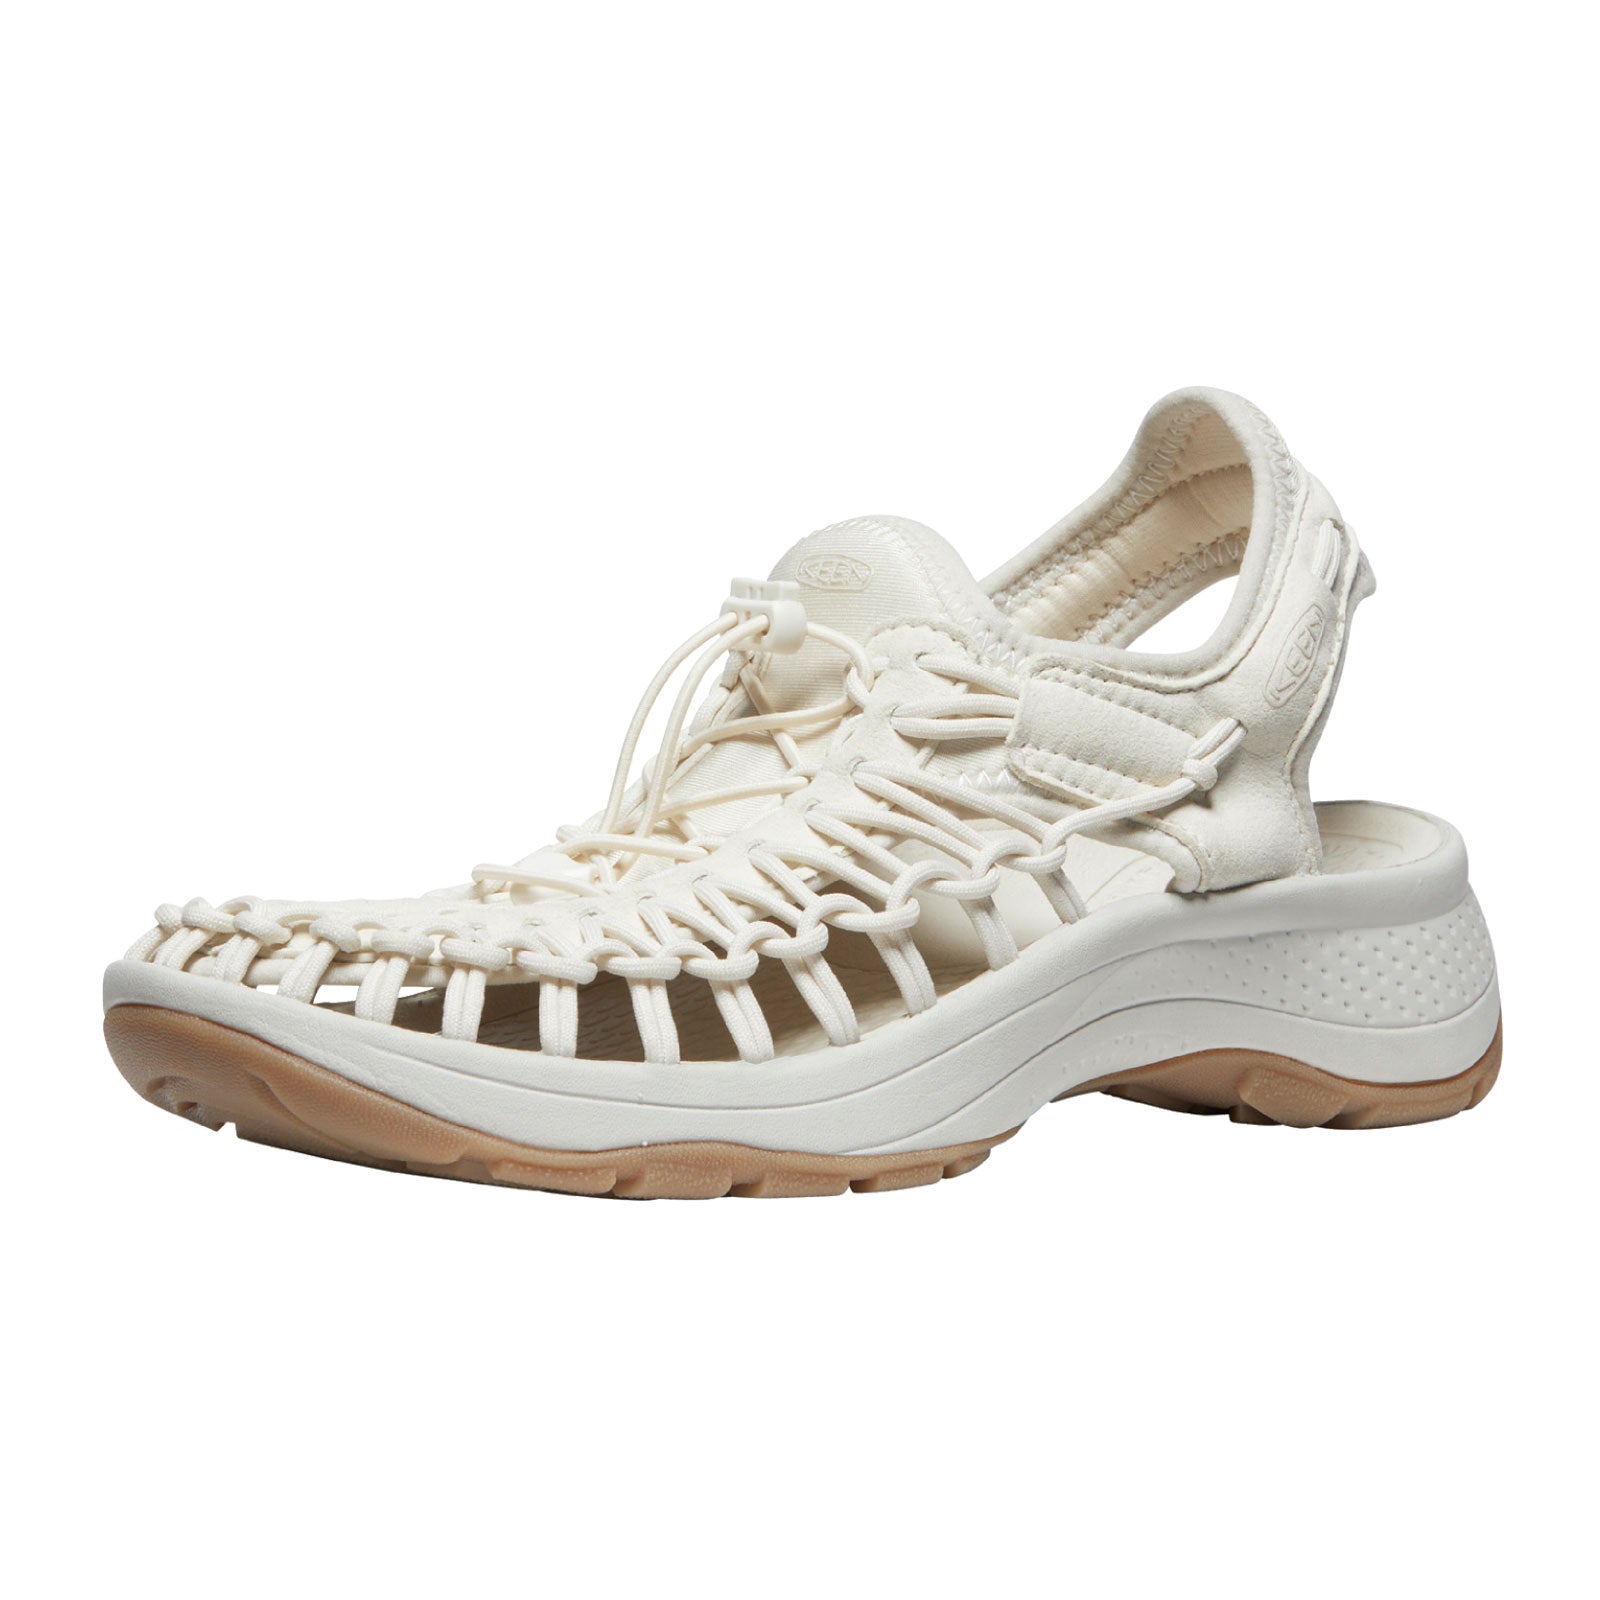 Women's Summer Sneaker Sandals Shoes Wedge Heel Open Toe Platform Roman  Open Toe | eBay